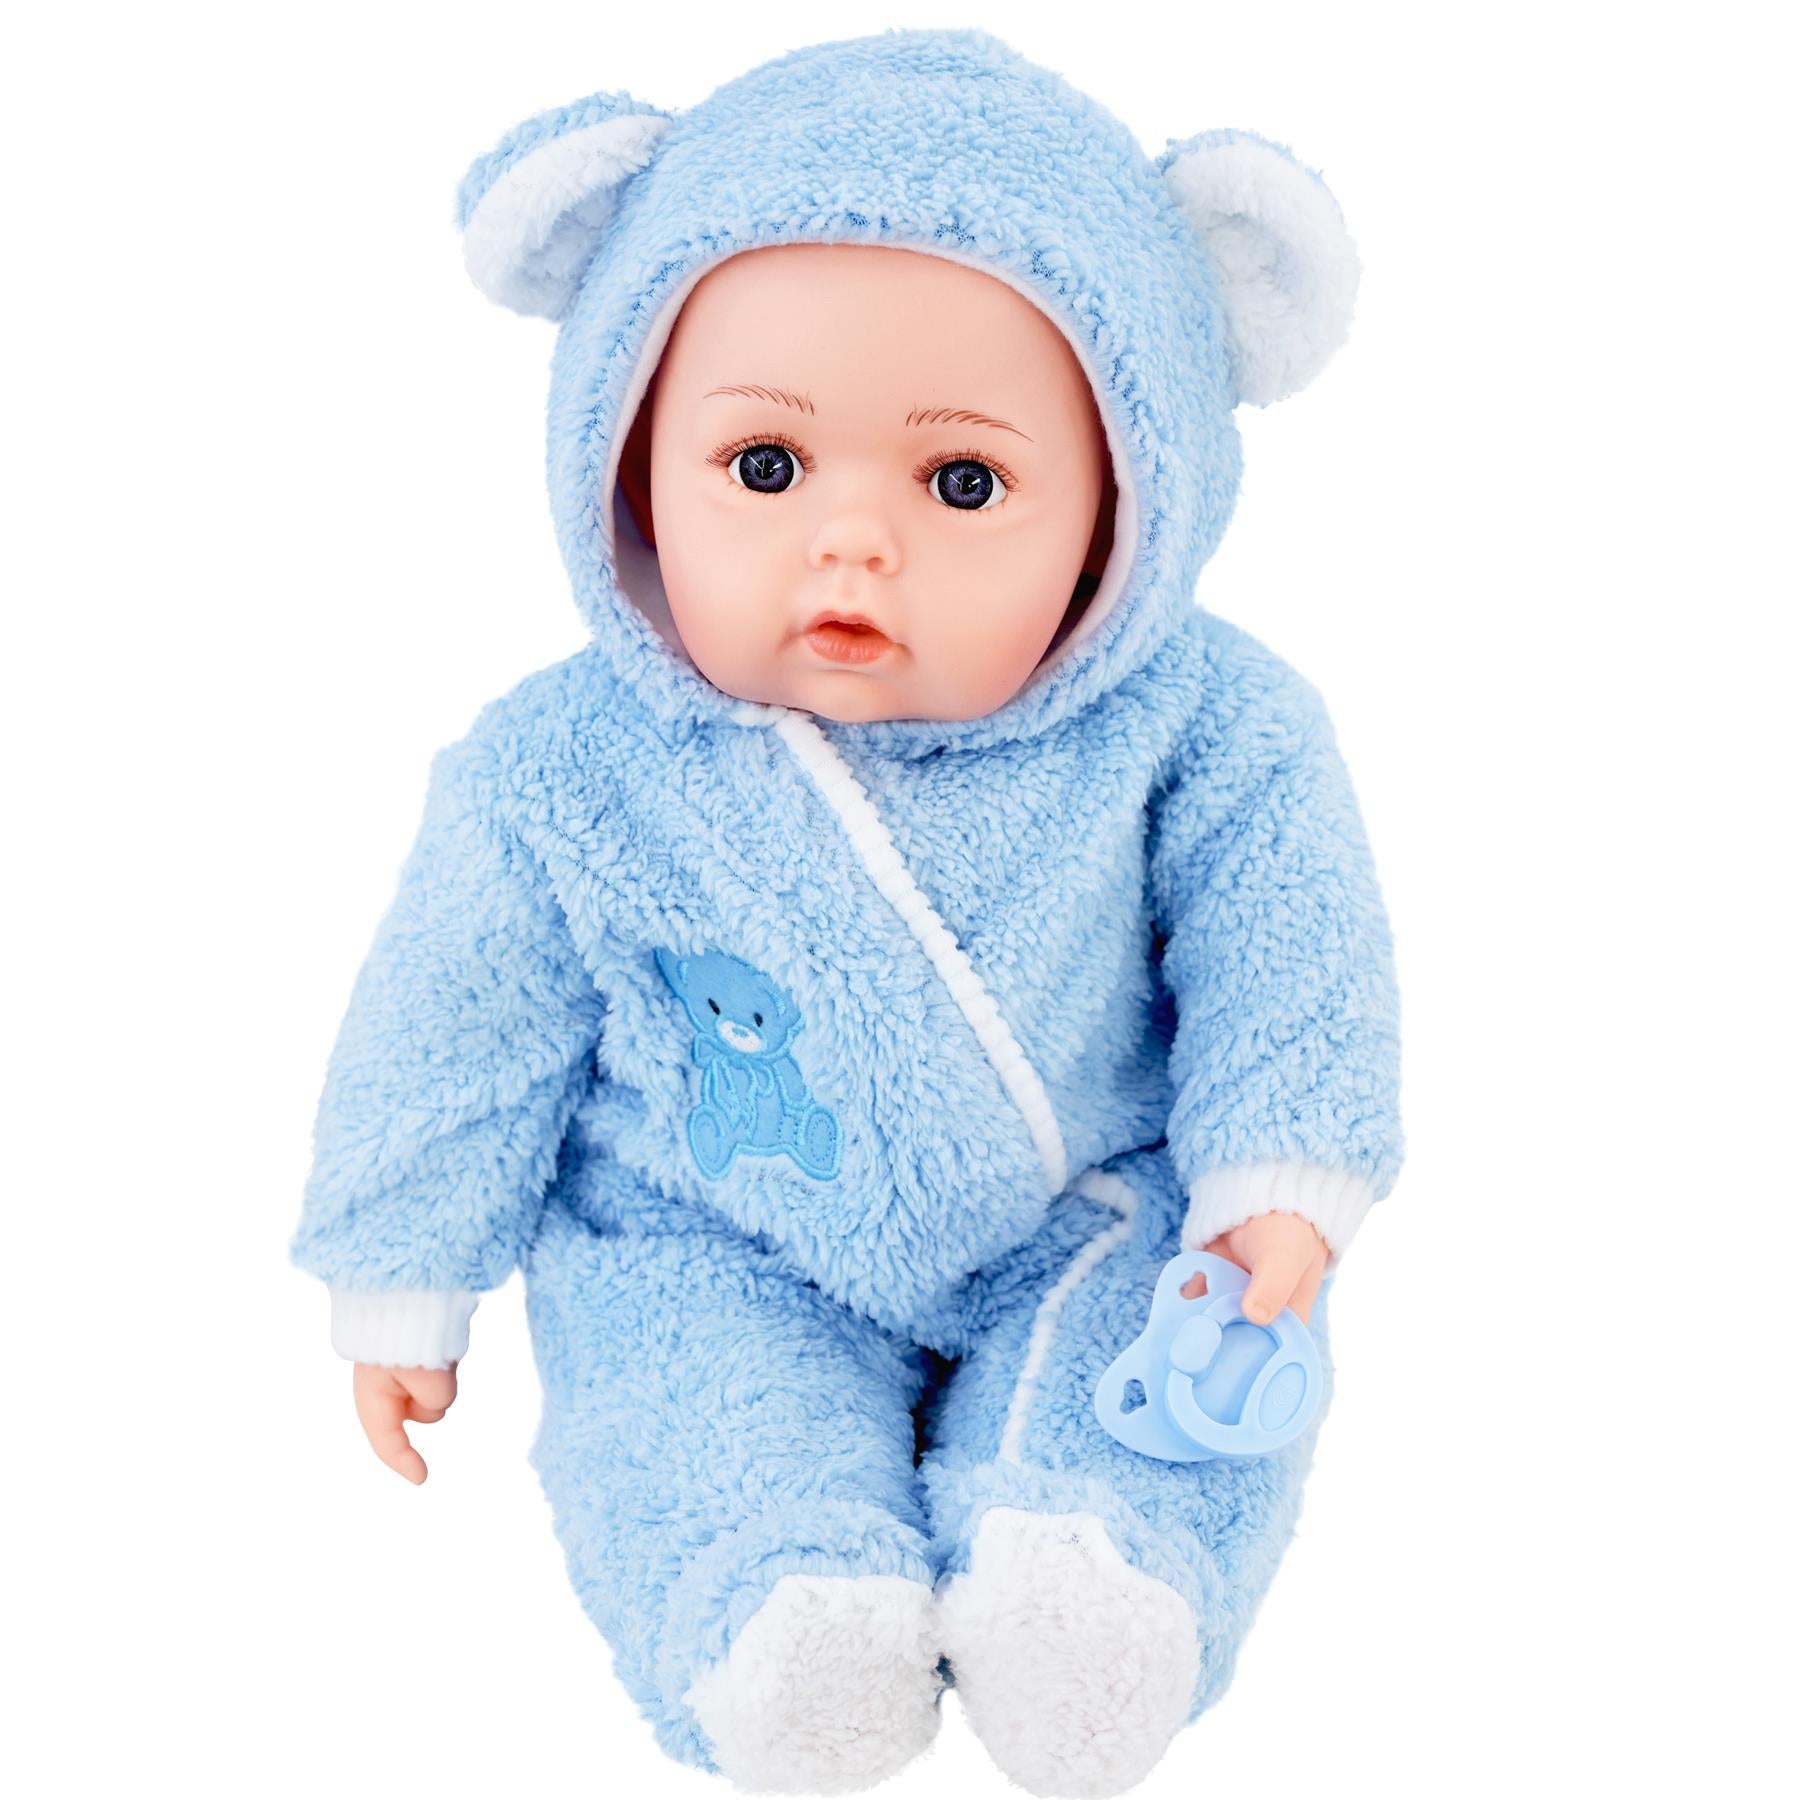 Grey Bibi Baby Doll + Extra Outfit by BiBi Doll - UKBuyZone